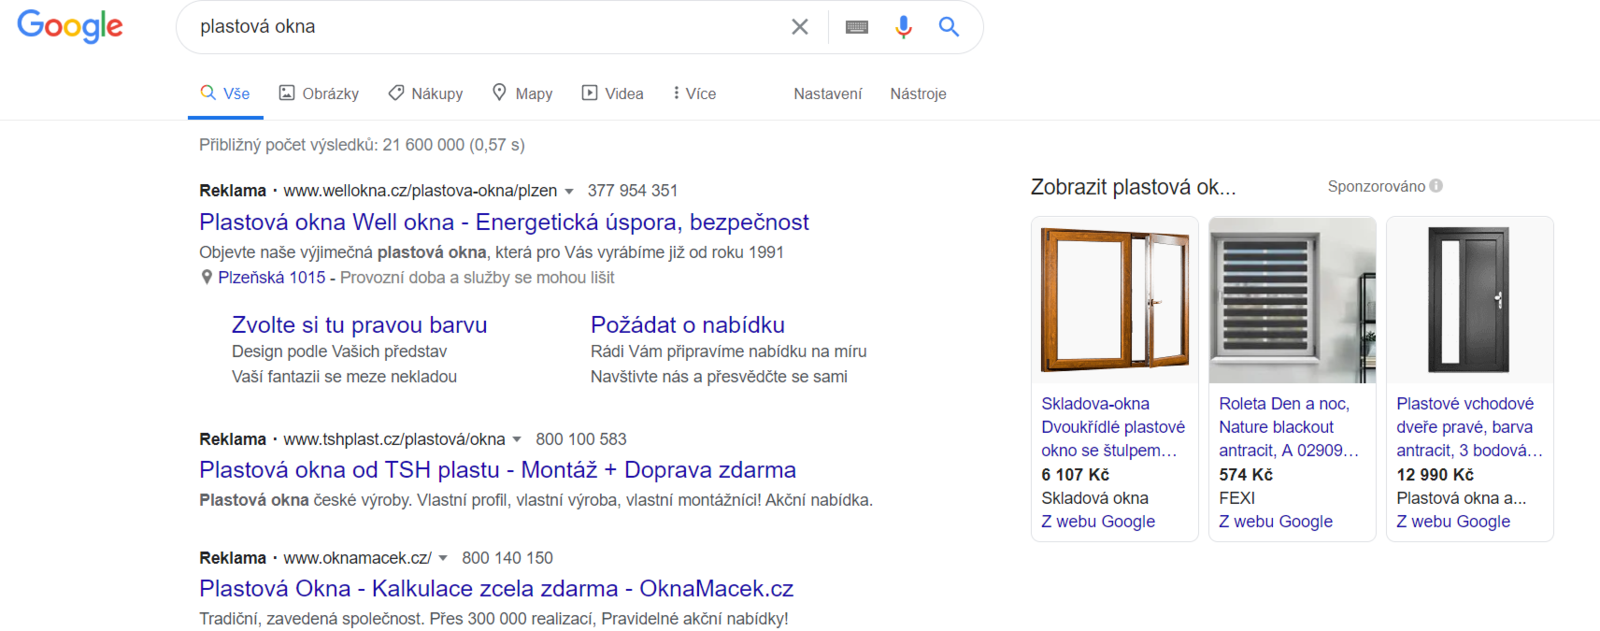 Reklama na Googlu, Google Ads - Plzeň.png